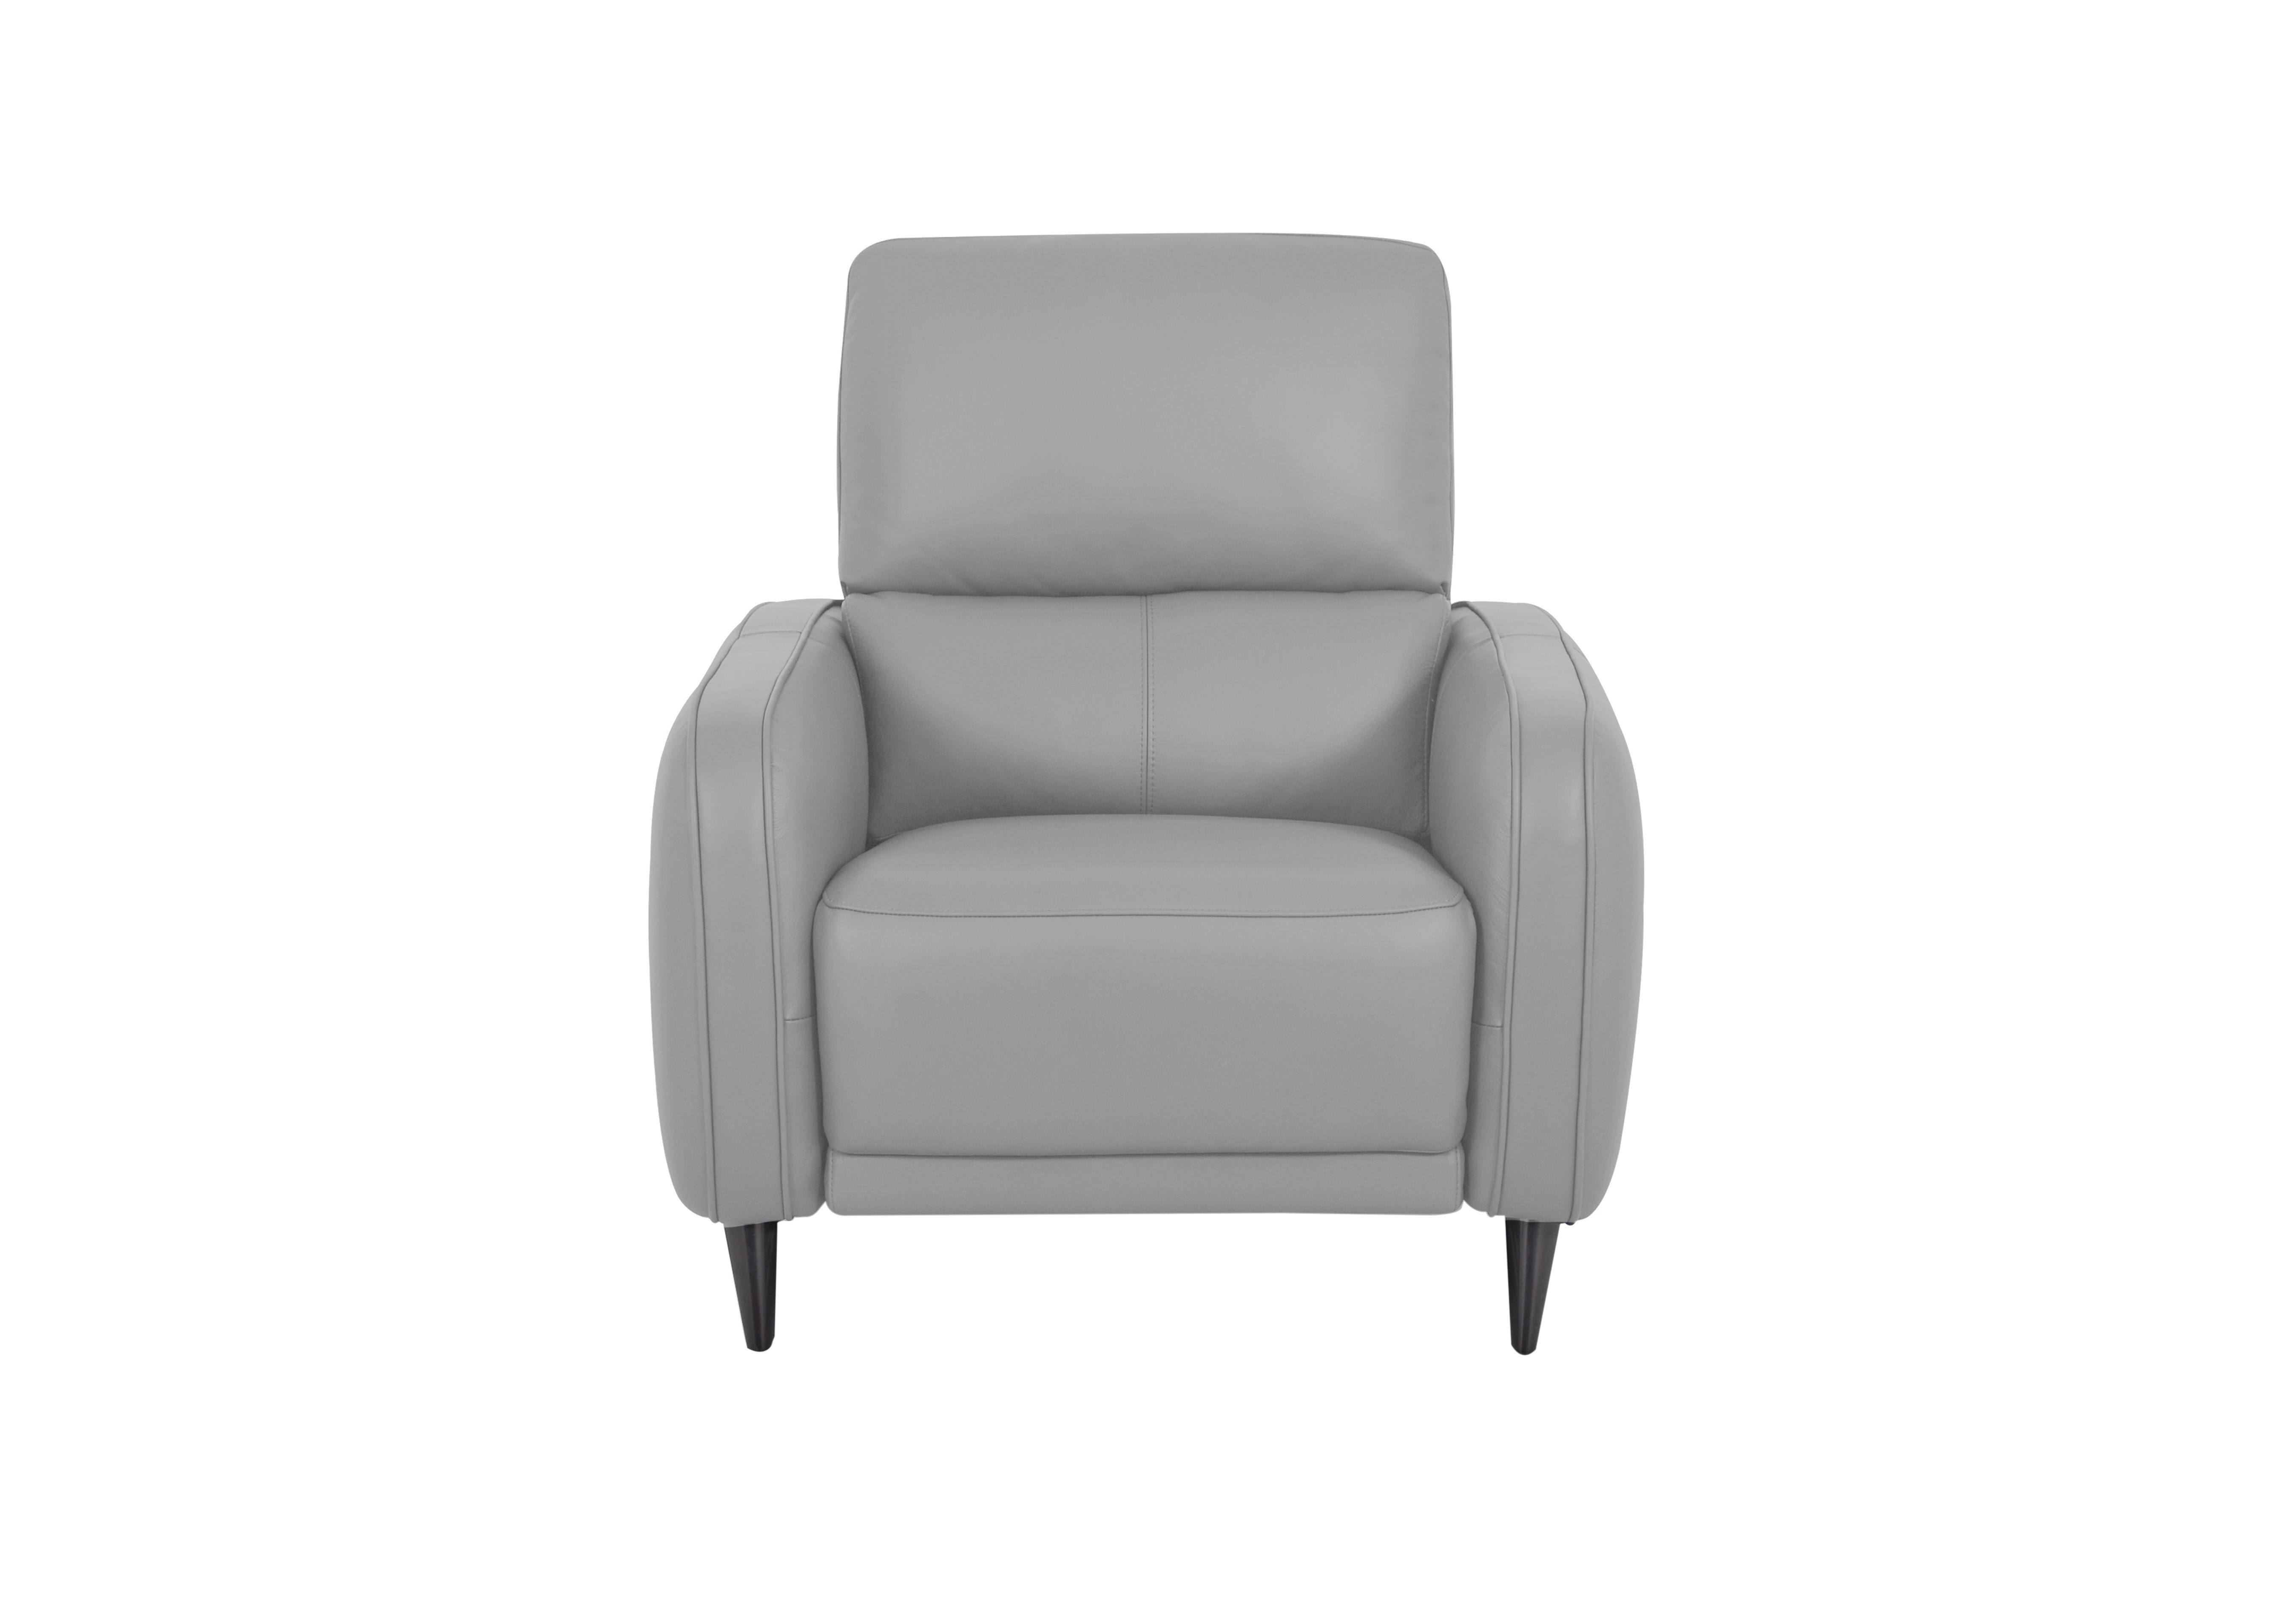 Logan Leather Chair in Nn-516e Light Grey on Furniture Village